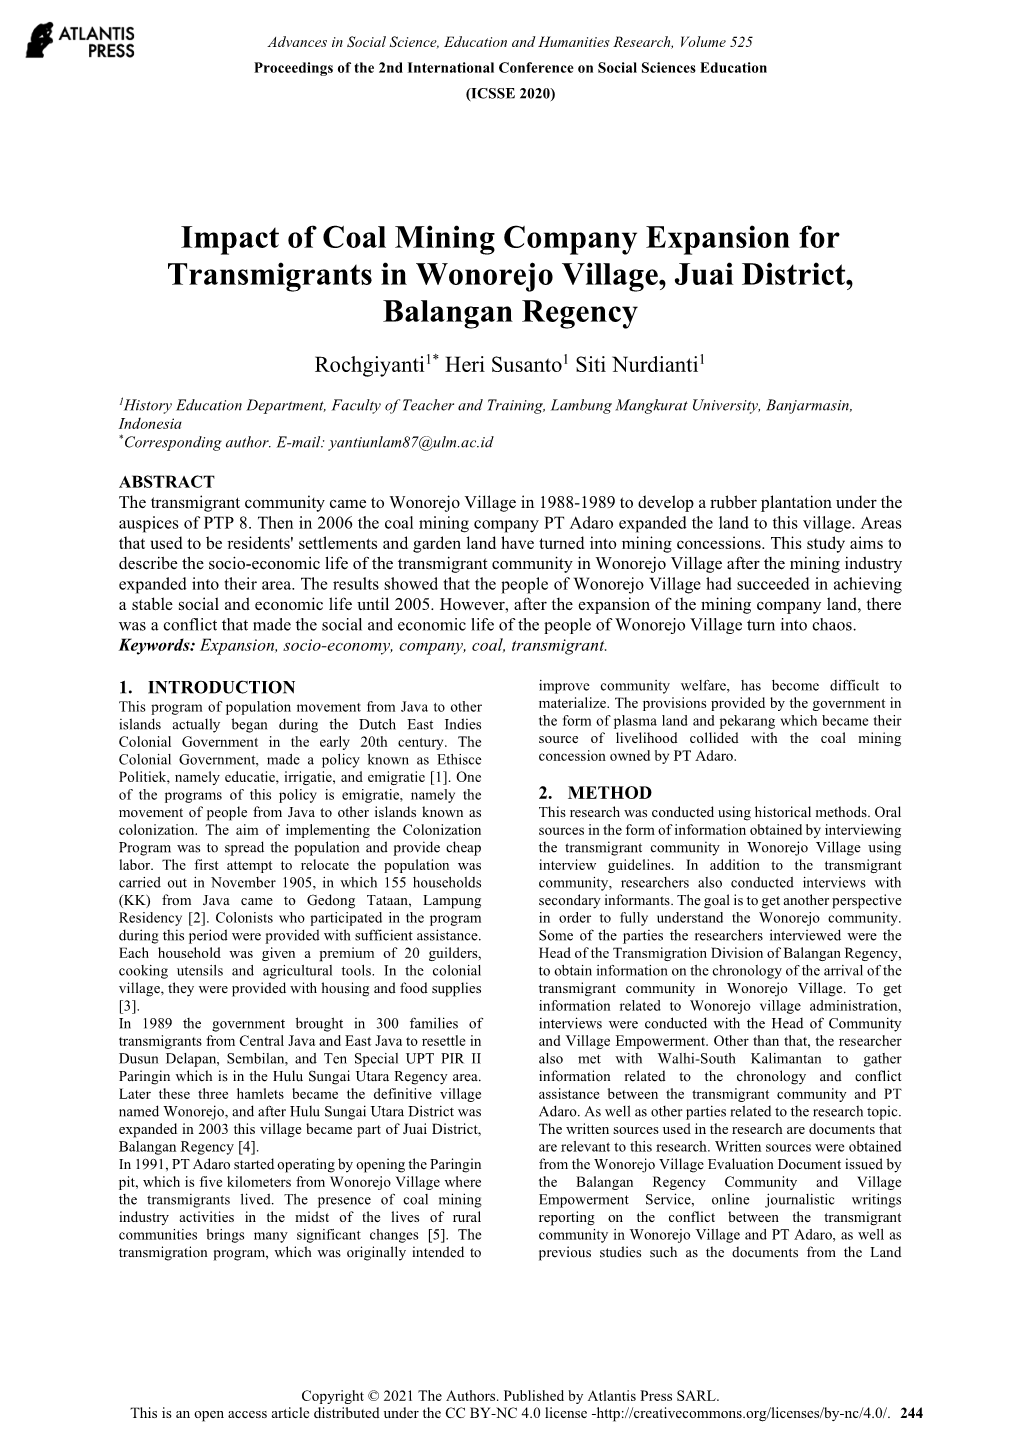 Impact of Coal Mining Company Expansion for Transmigrants in Wonorejo Village, Juai District, Balangan Regency